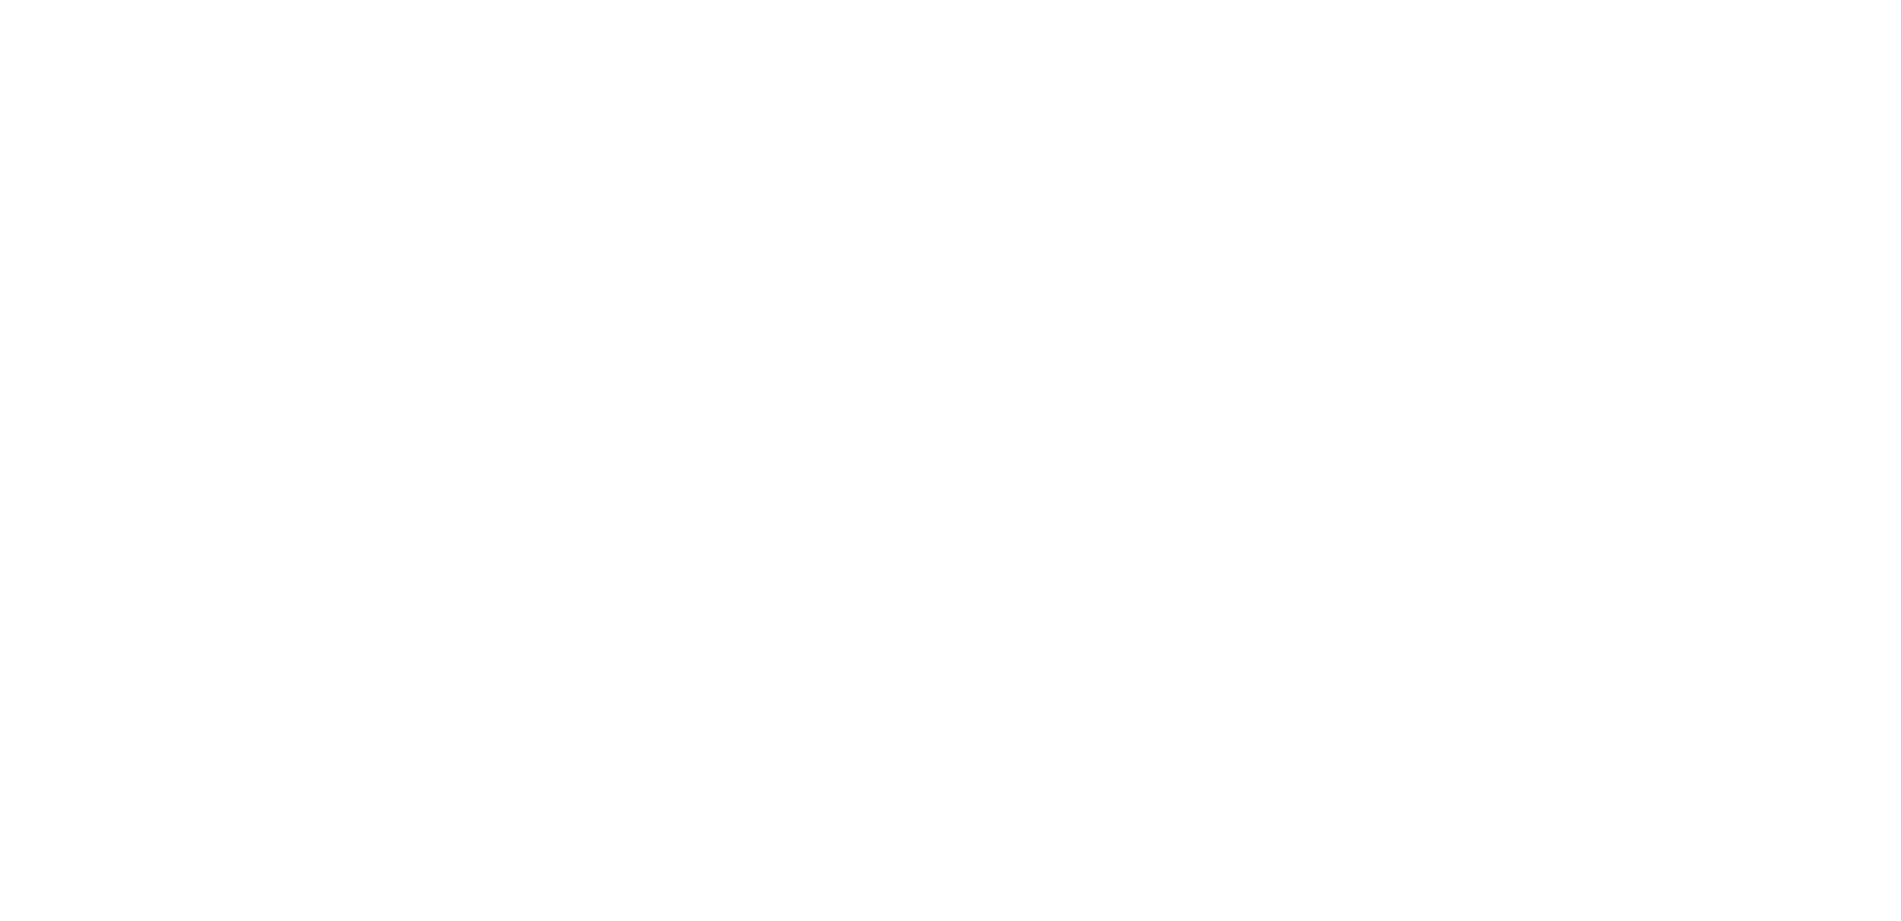 Perfect Business Logo White